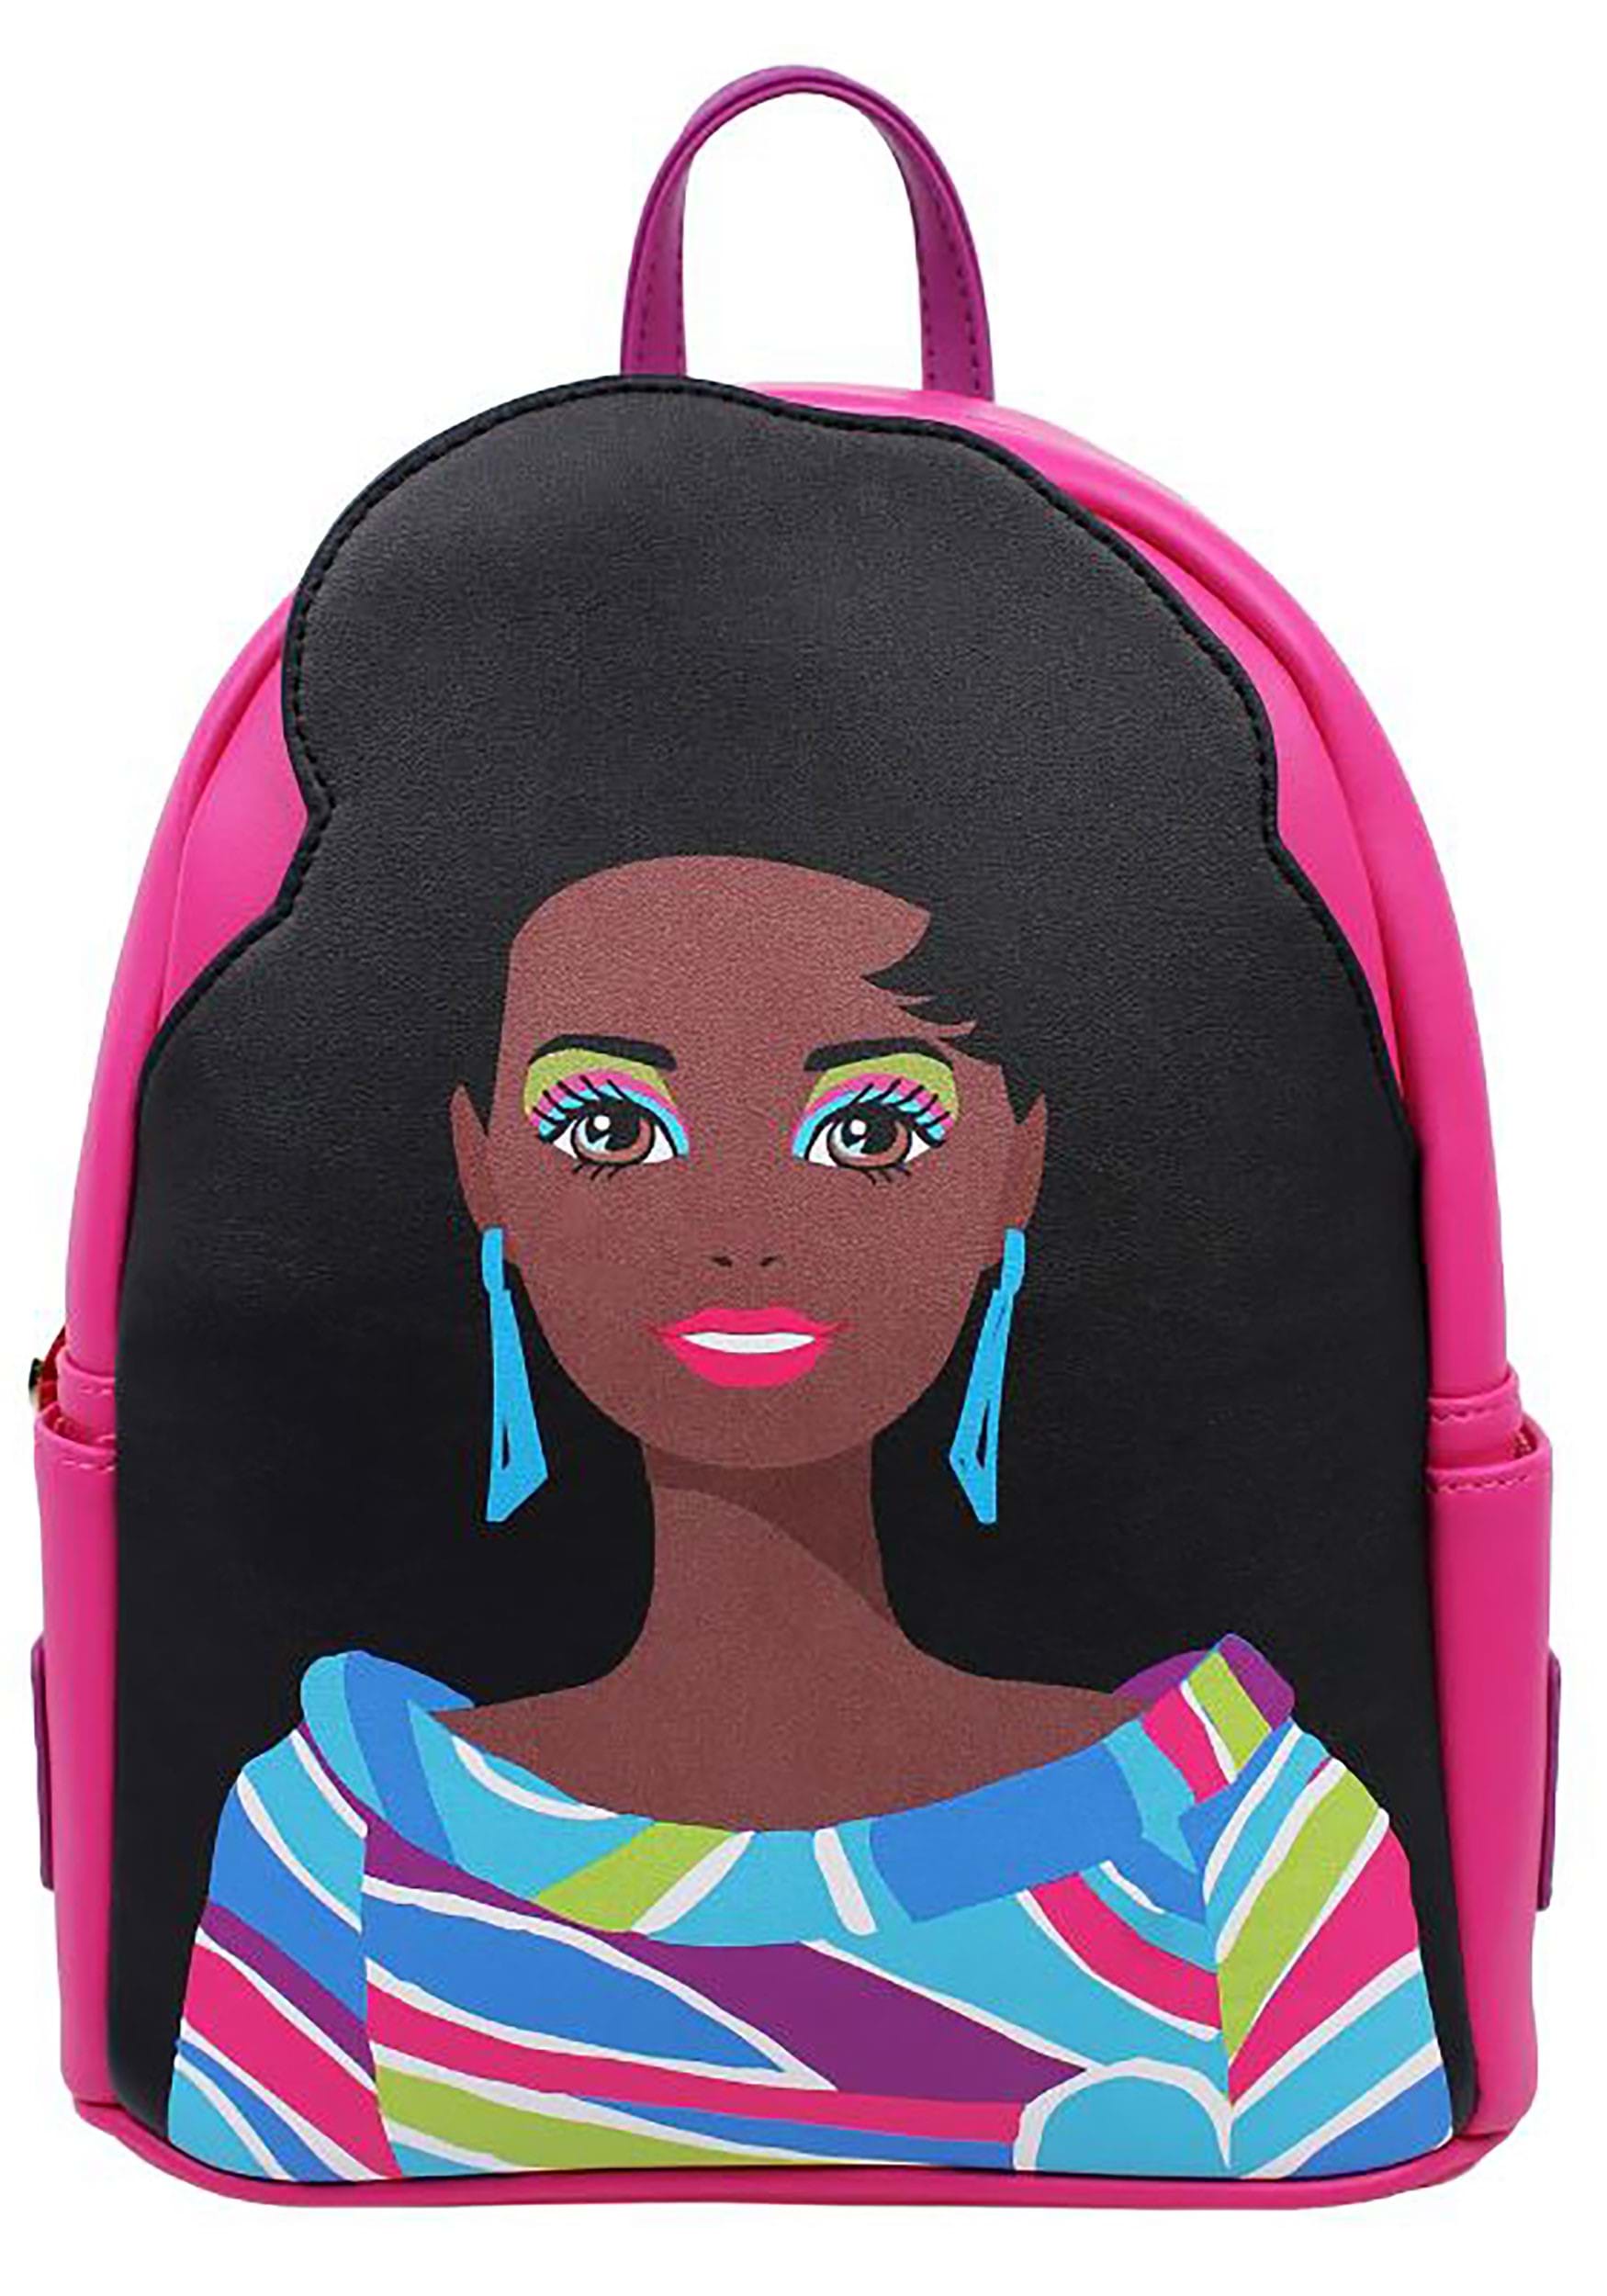 Image of Cakeworthy Totally Hair Barbie Black Mini Backpack by Cakeworthy | Cakeworthy Barbie